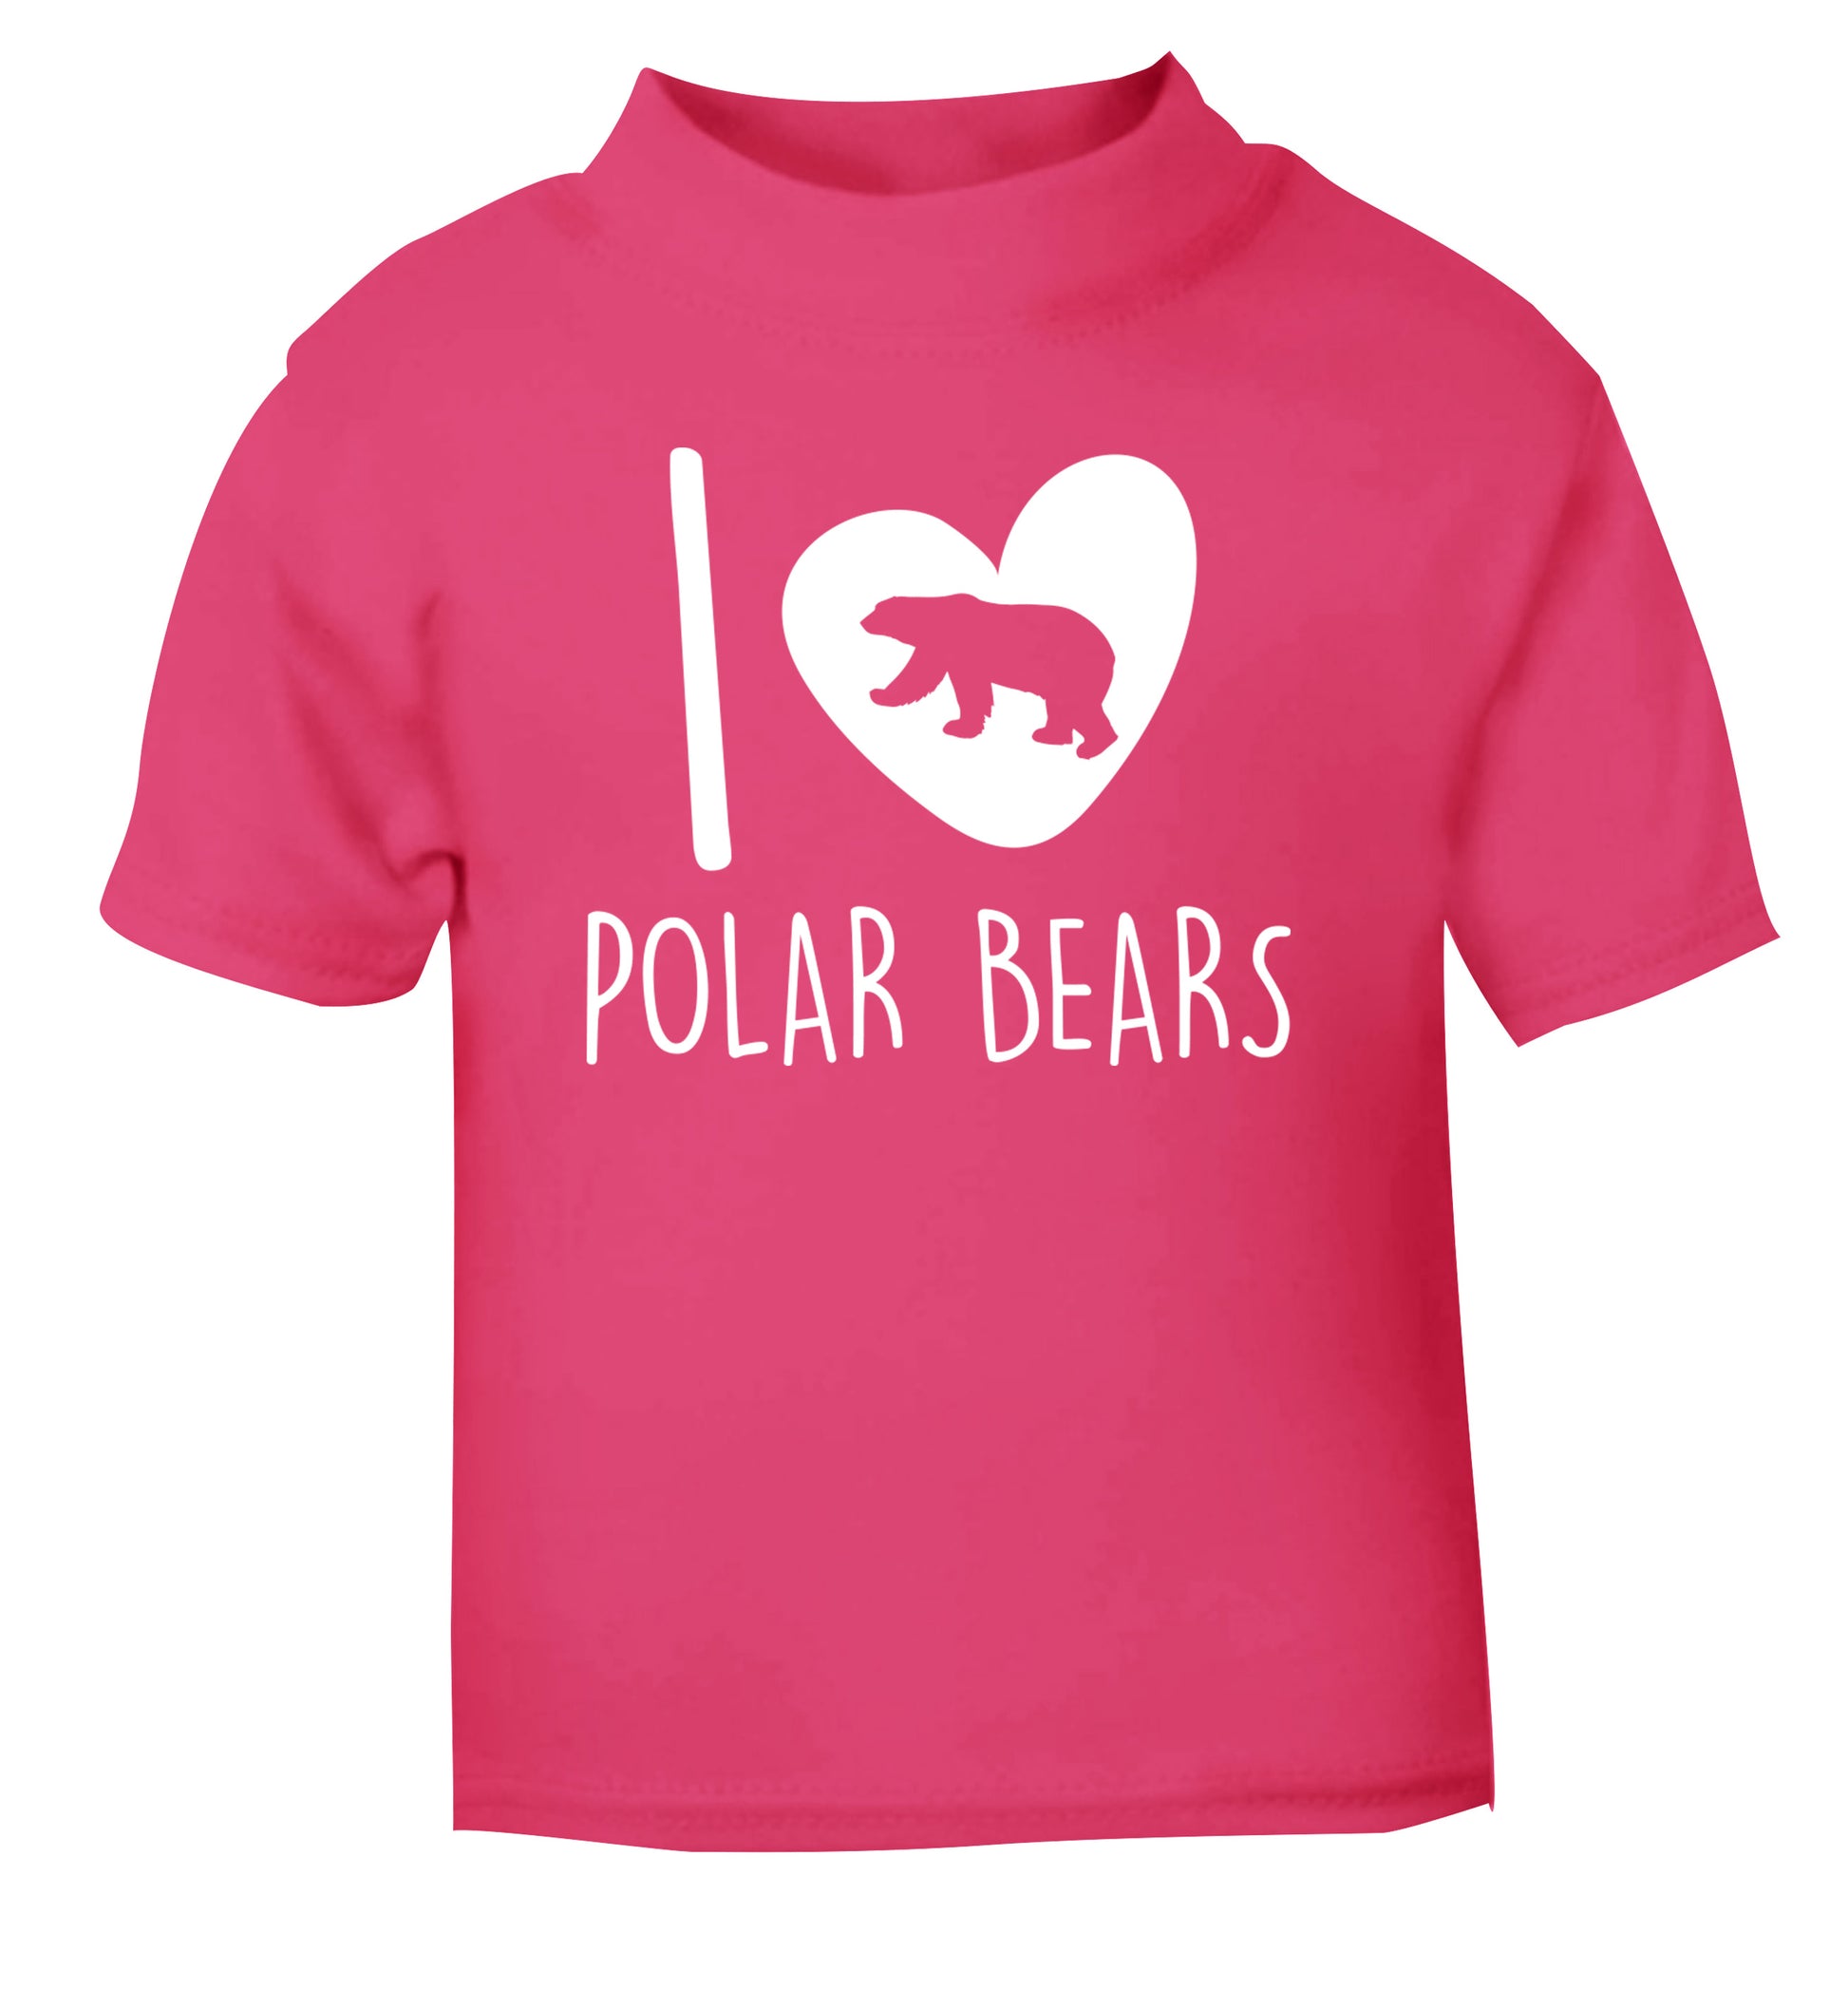 I Love Polar Bears pink Baby Toddler Tshirt 2 Years